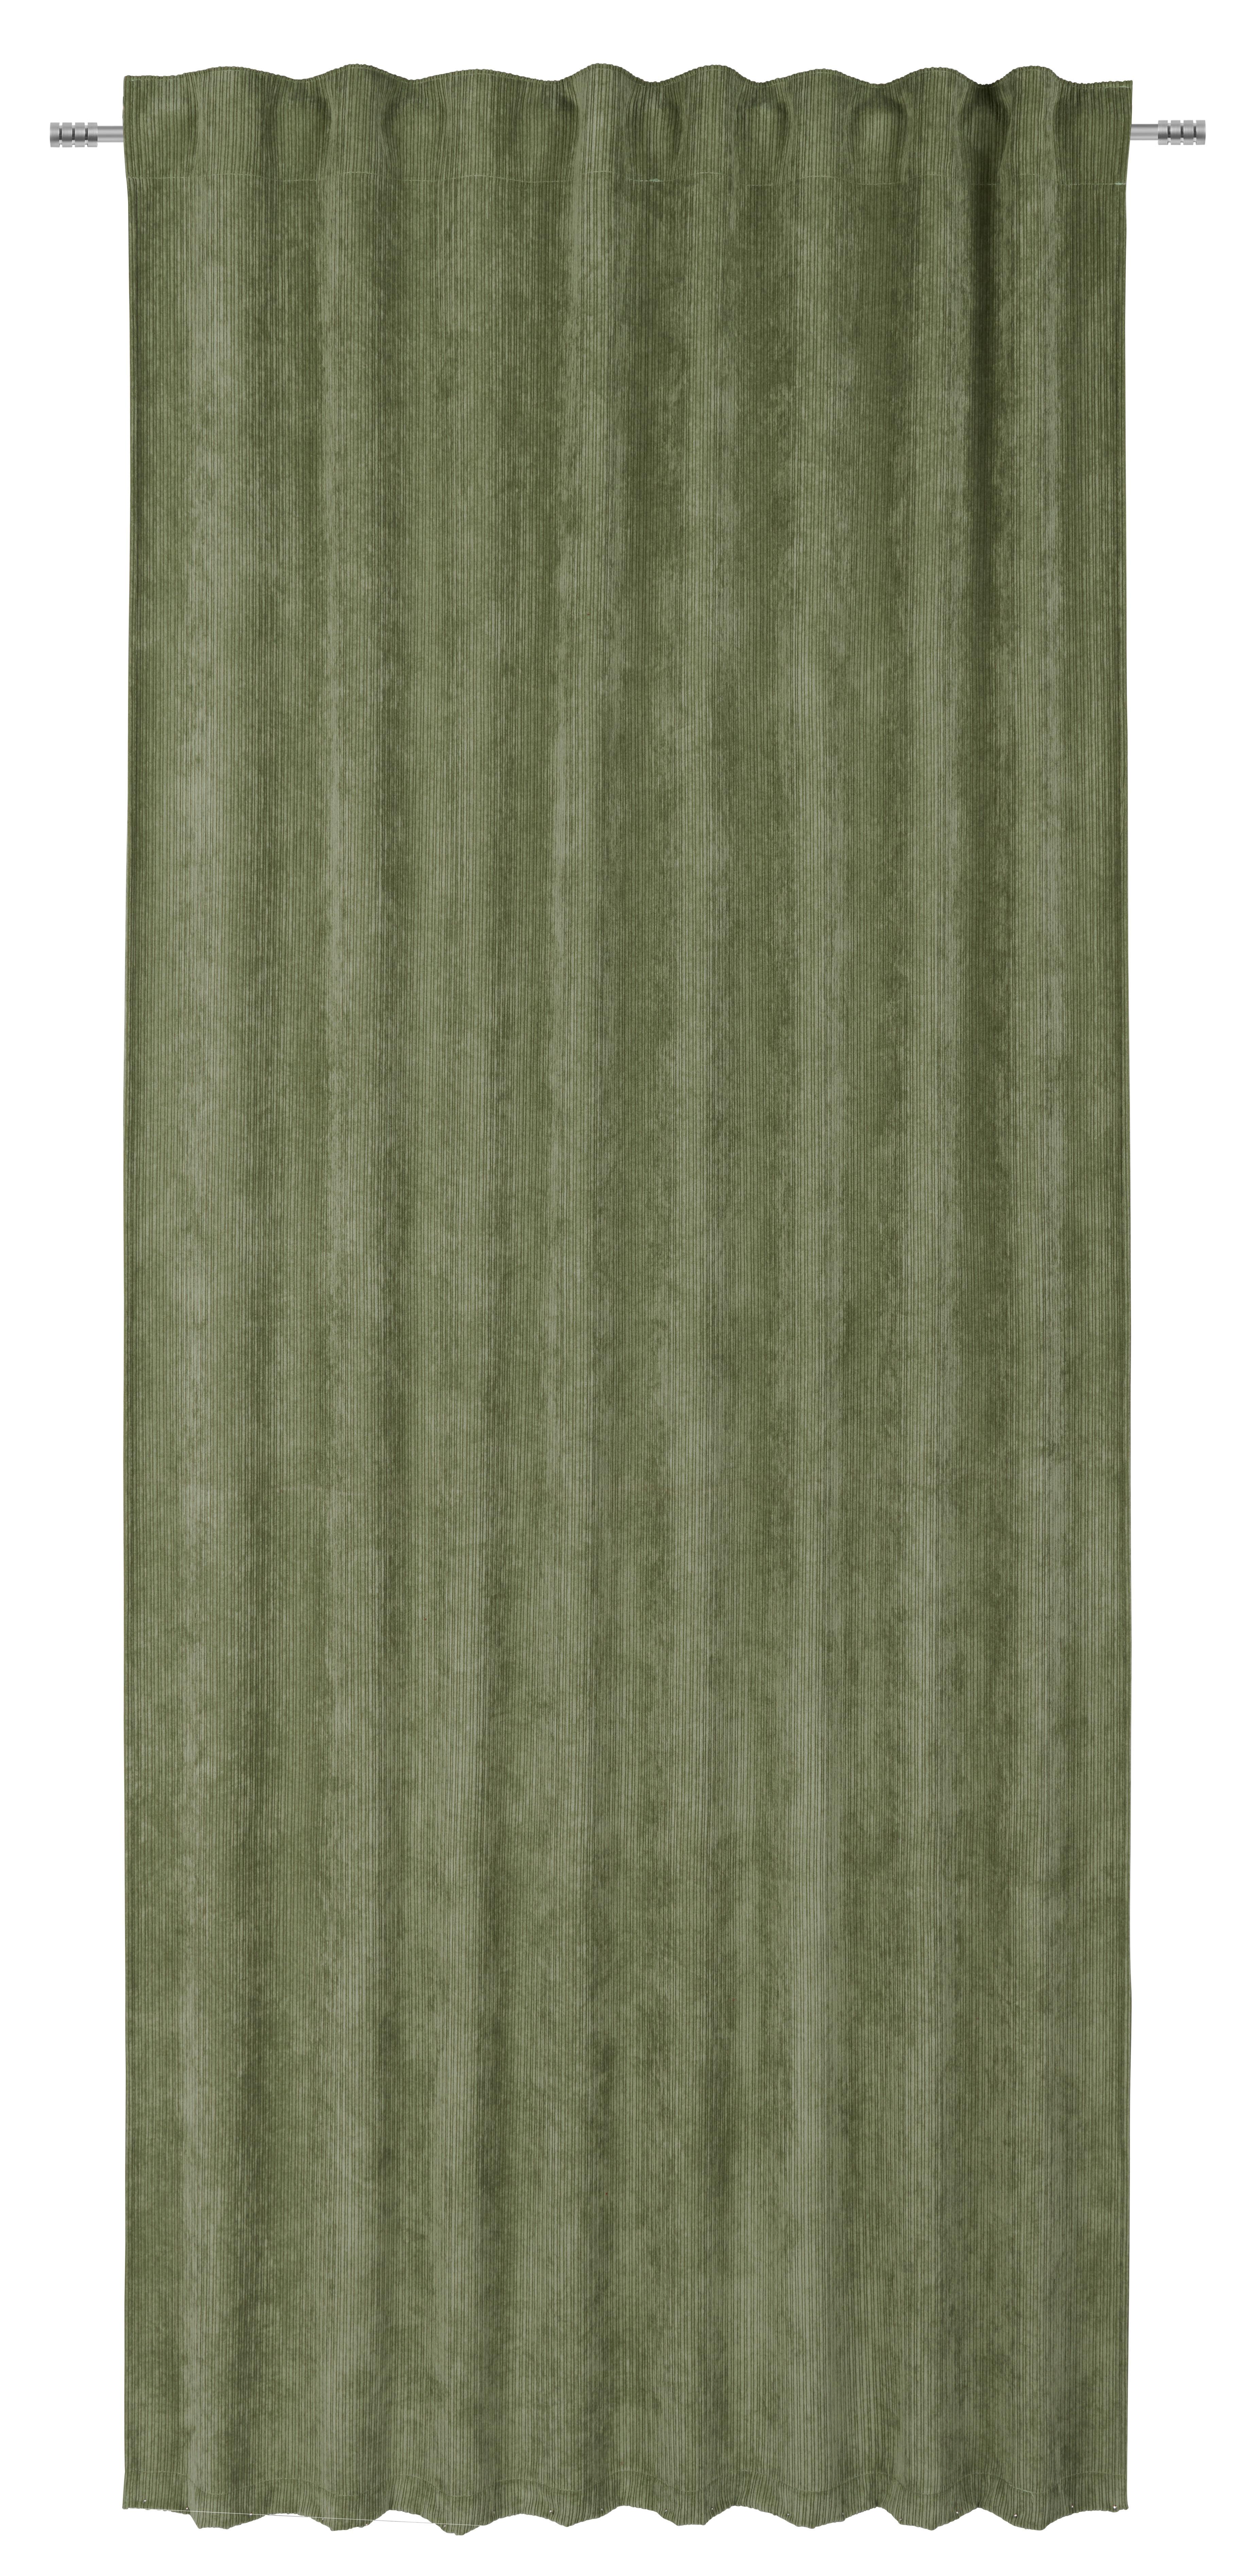 Fertigvorhang Corinna in Grün ca. 135x245cm - Grün, MODERN, Textil (135/245cm) - Premium Living